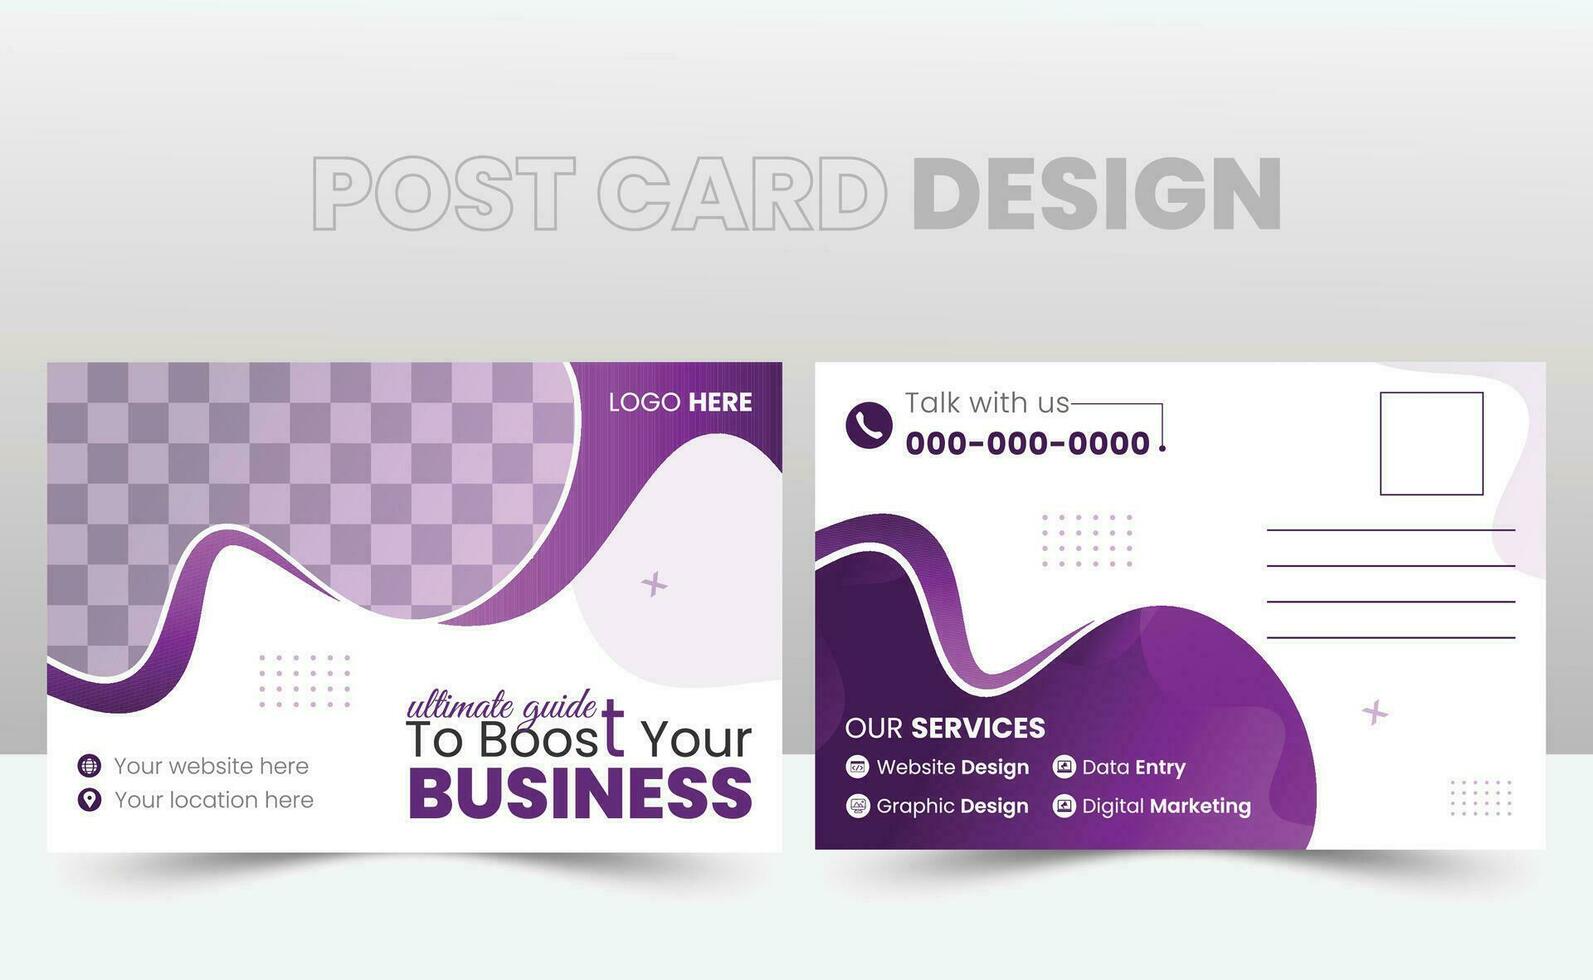 kreativ korporativ Postkarte Design. Marketing Agentur Postkarte Vorlage kostenlos Vektor